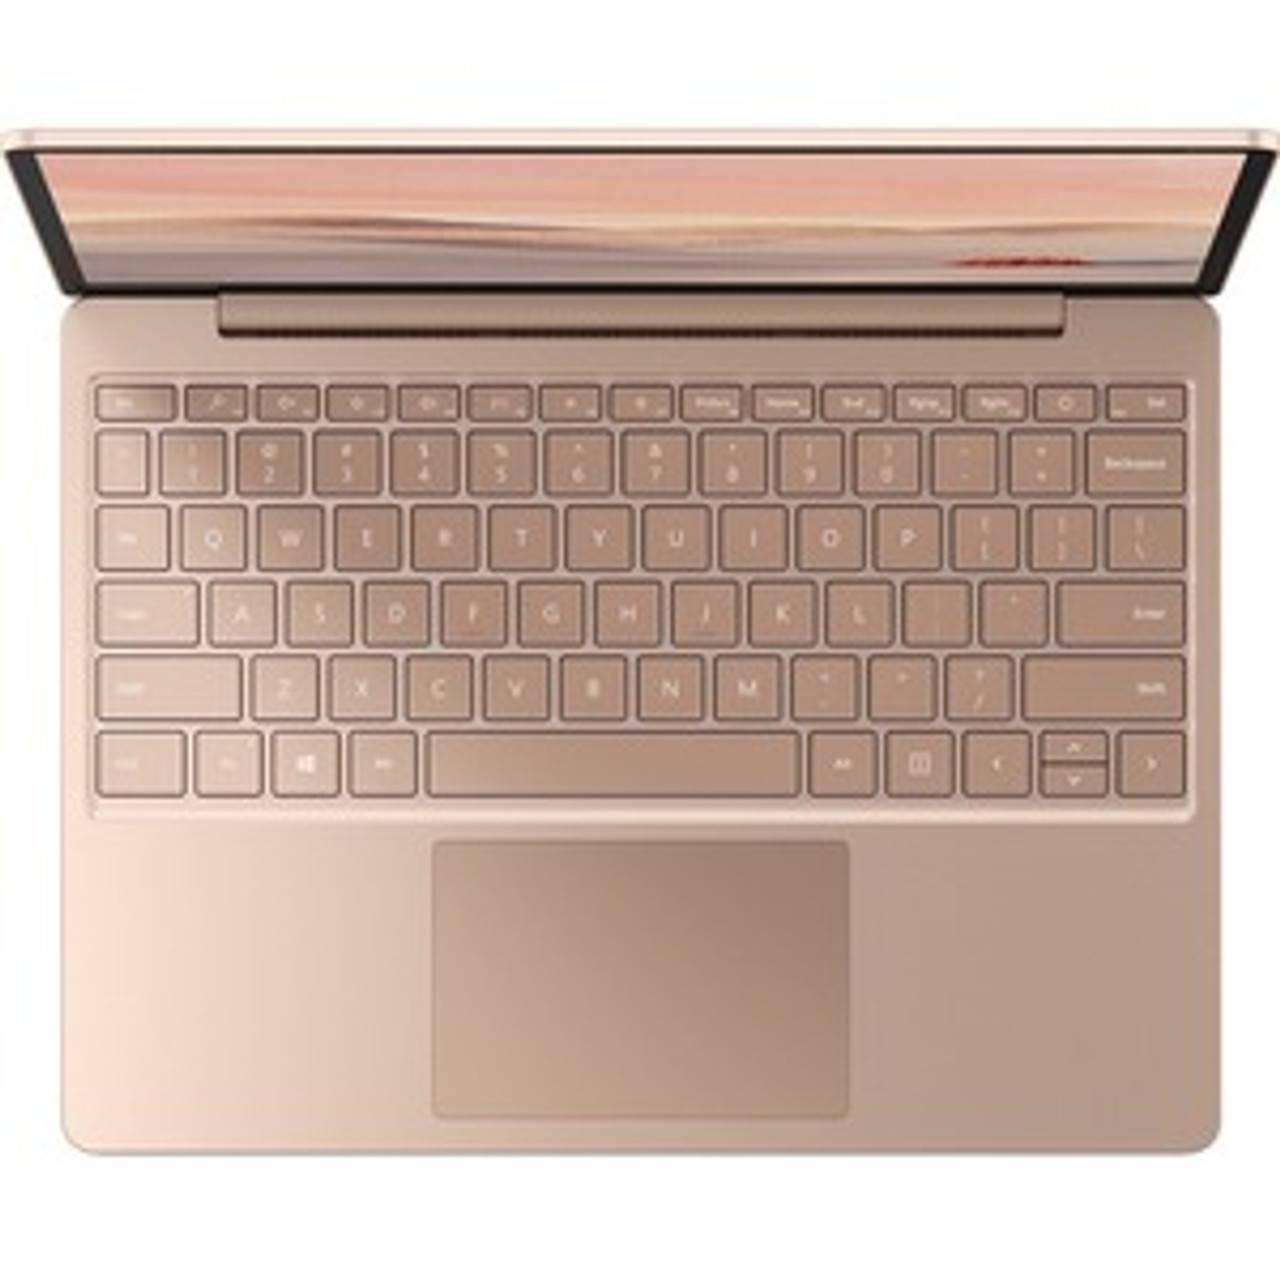 Microsoft- Surface Laptop Go 12.4" Touchscreen Notebook